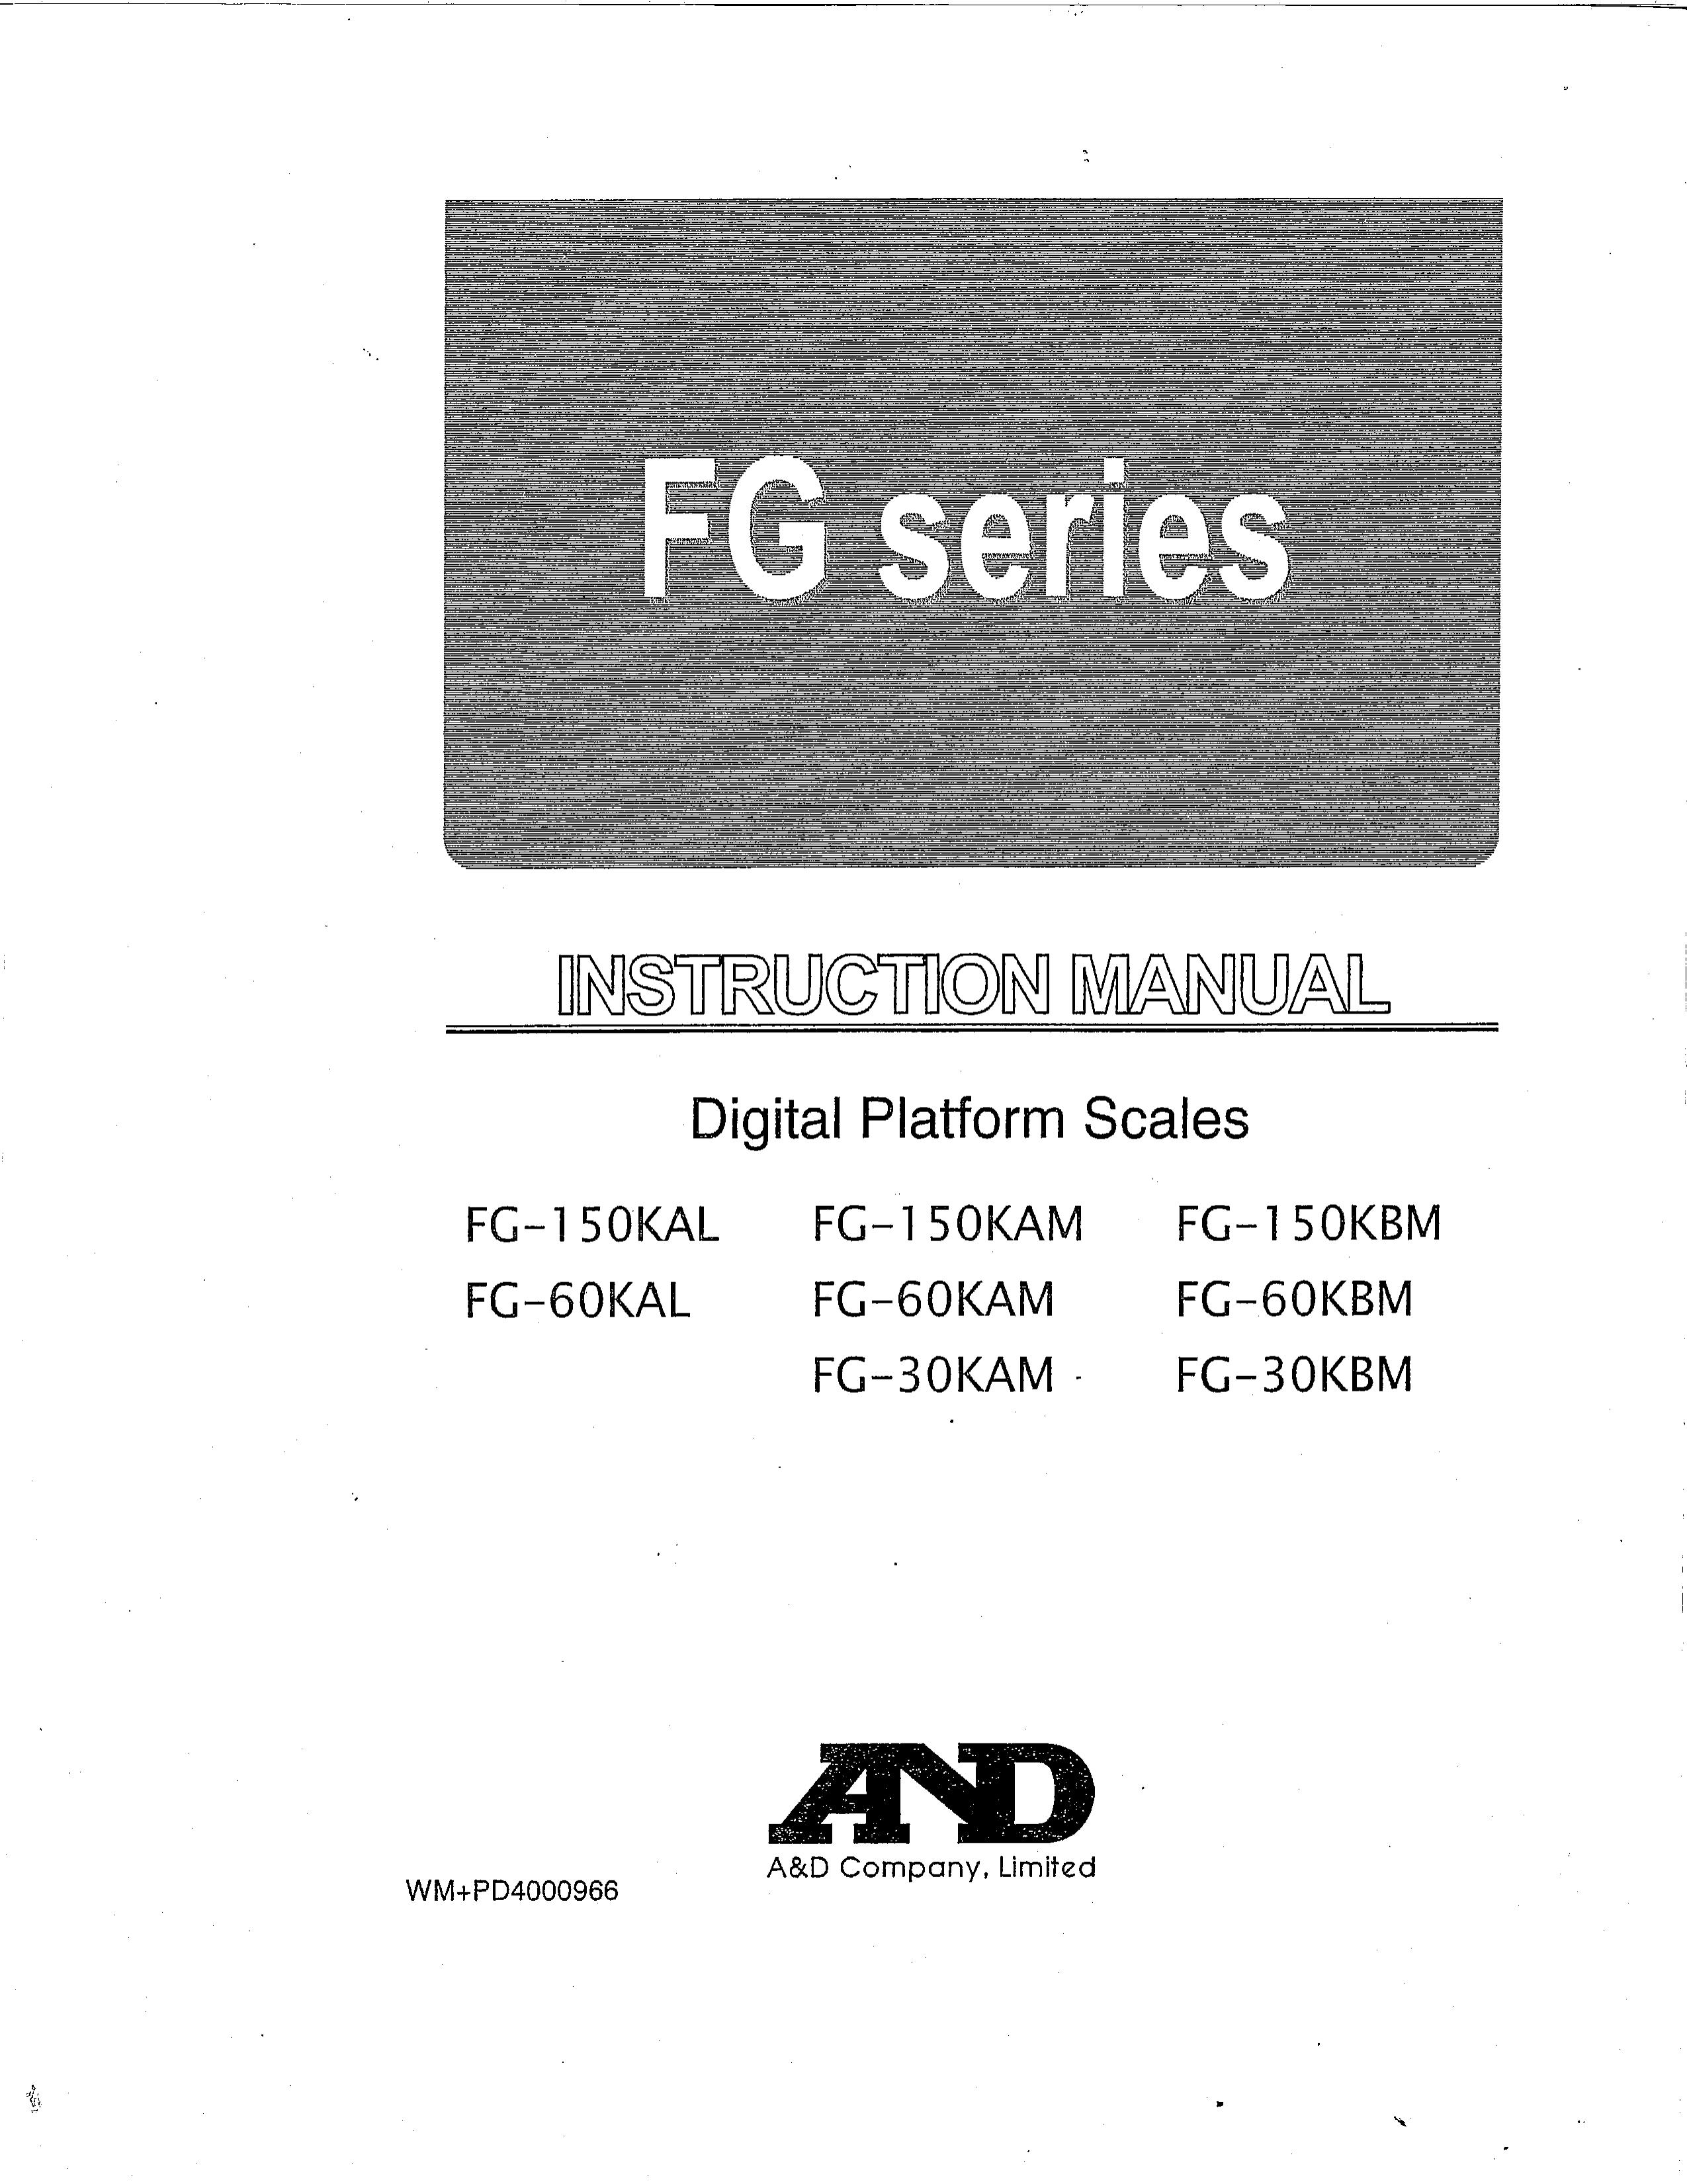 A&D FG-150KBM Scale User Manual